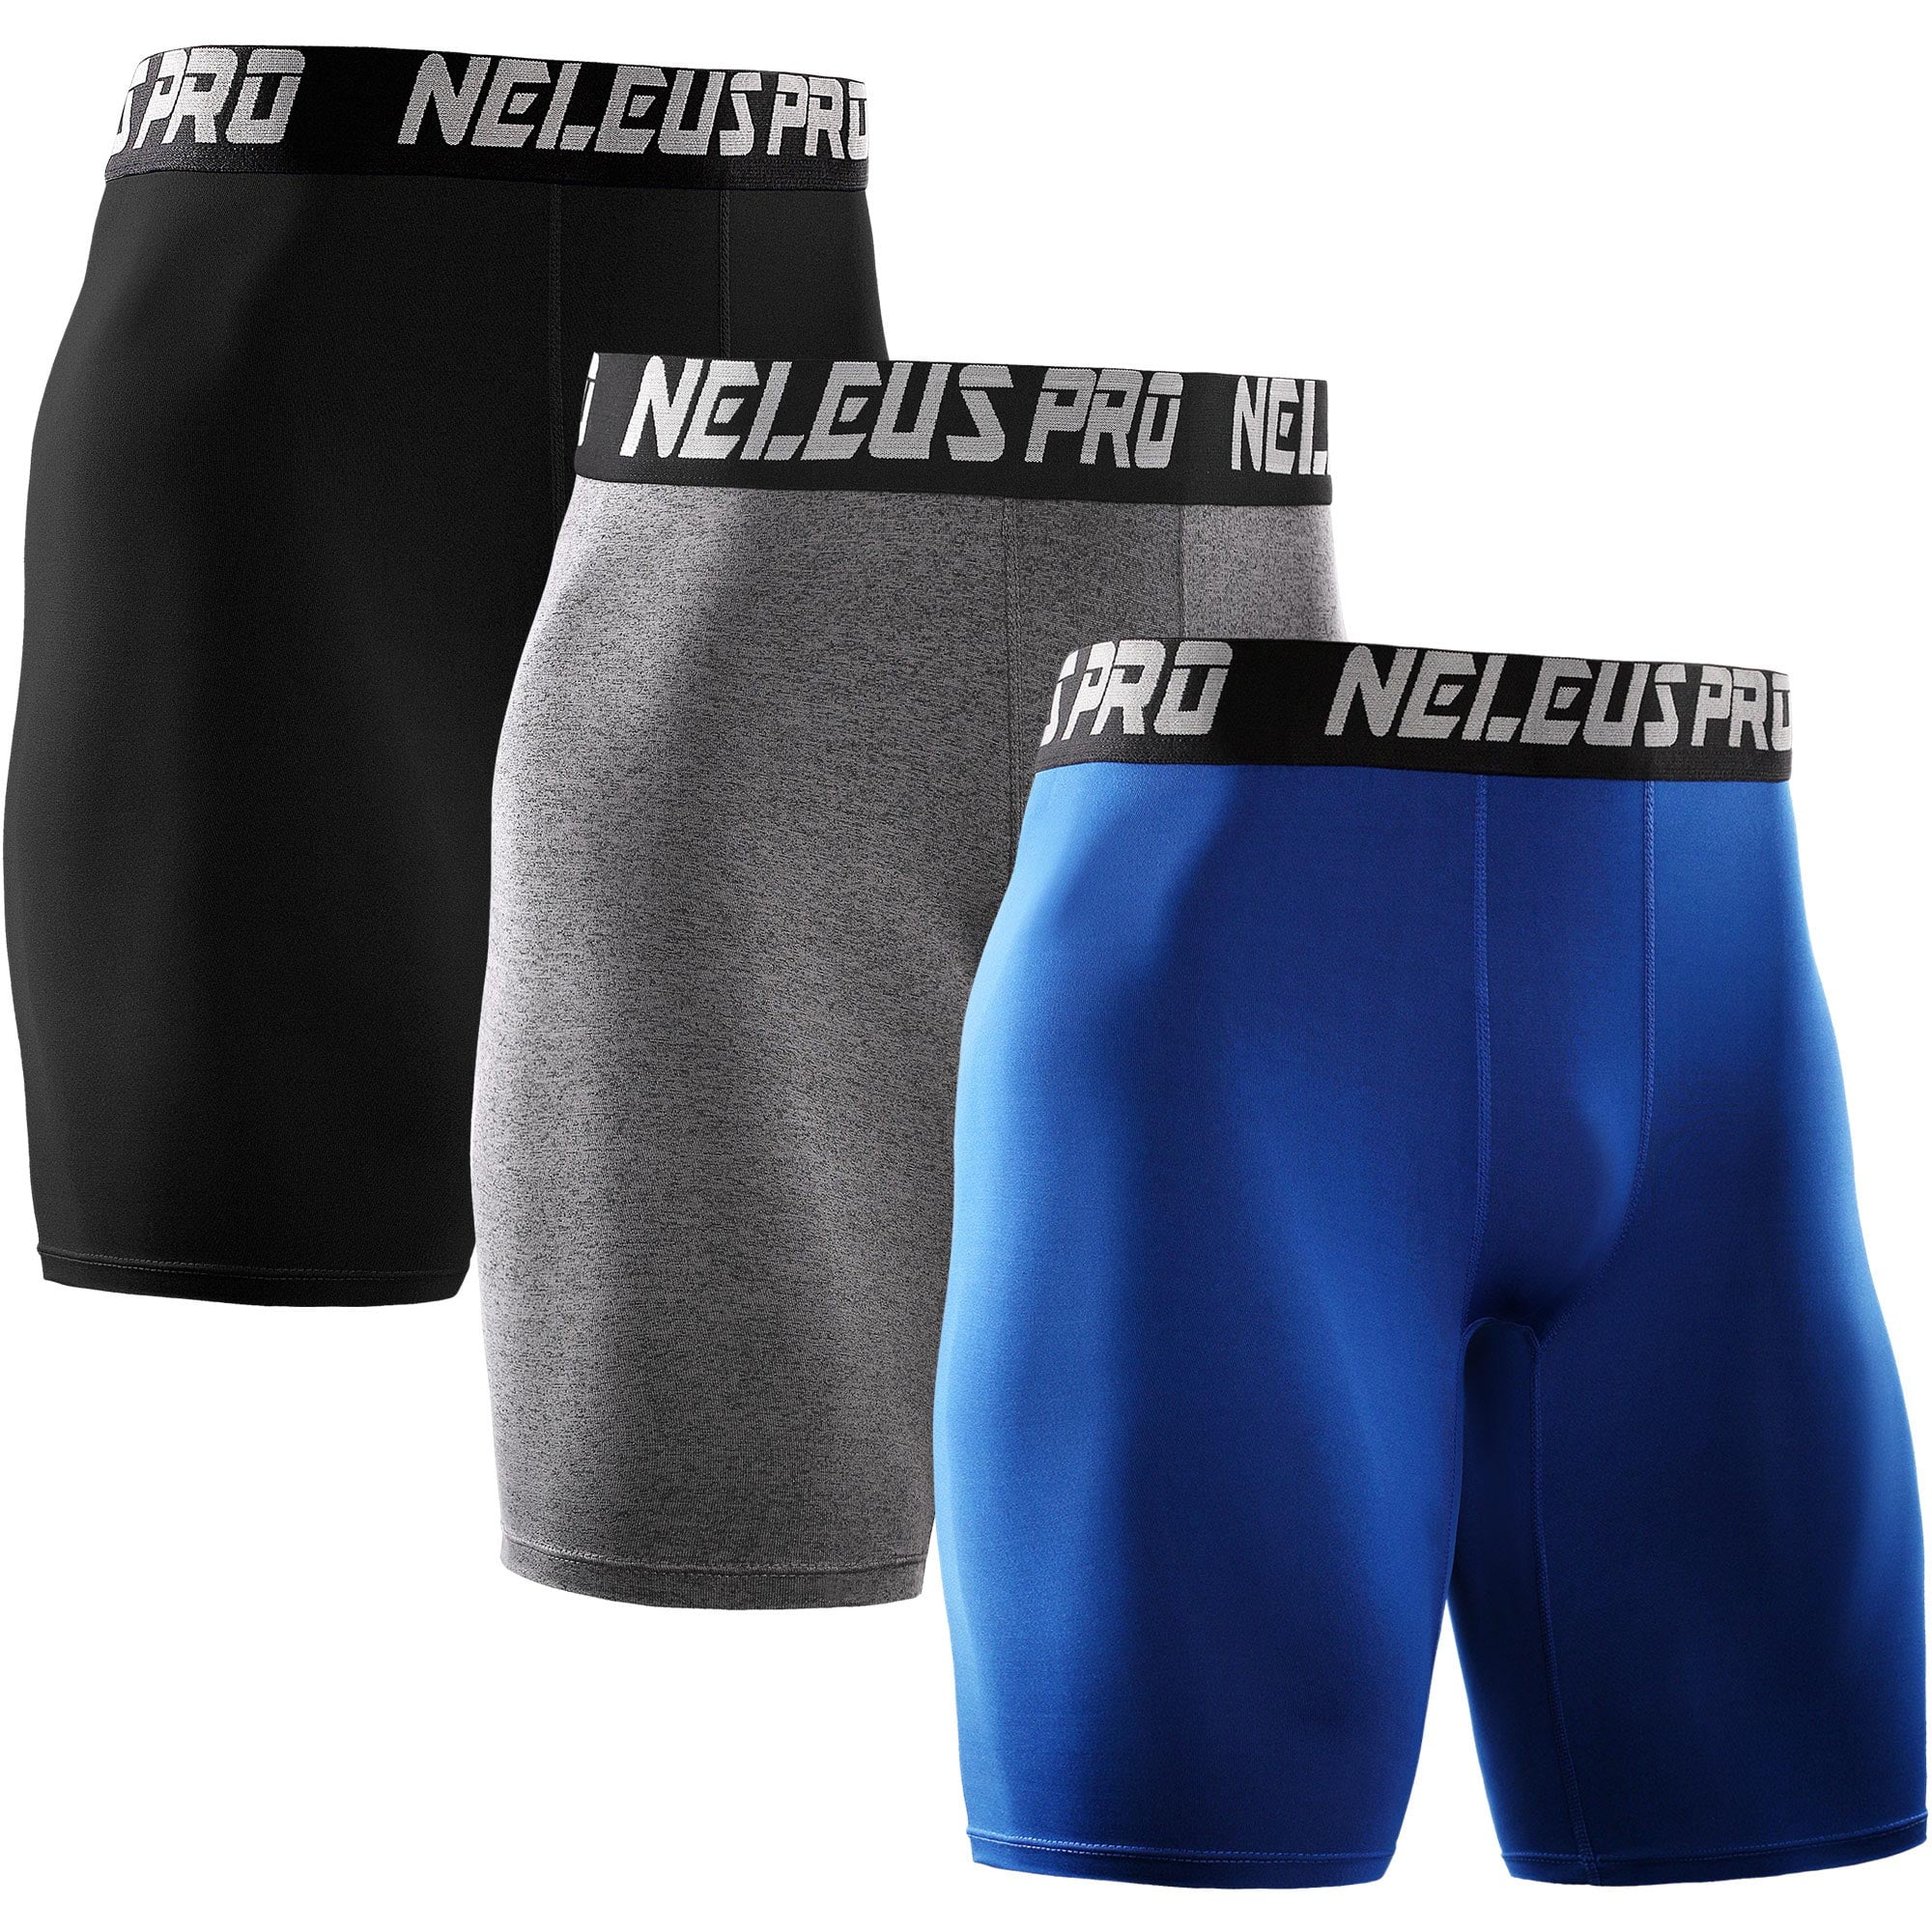 NELEUS Men's Performance Compression Shorts Athletic Workout Underwear 3  Pack,Black+Gray+Blue,US Size S